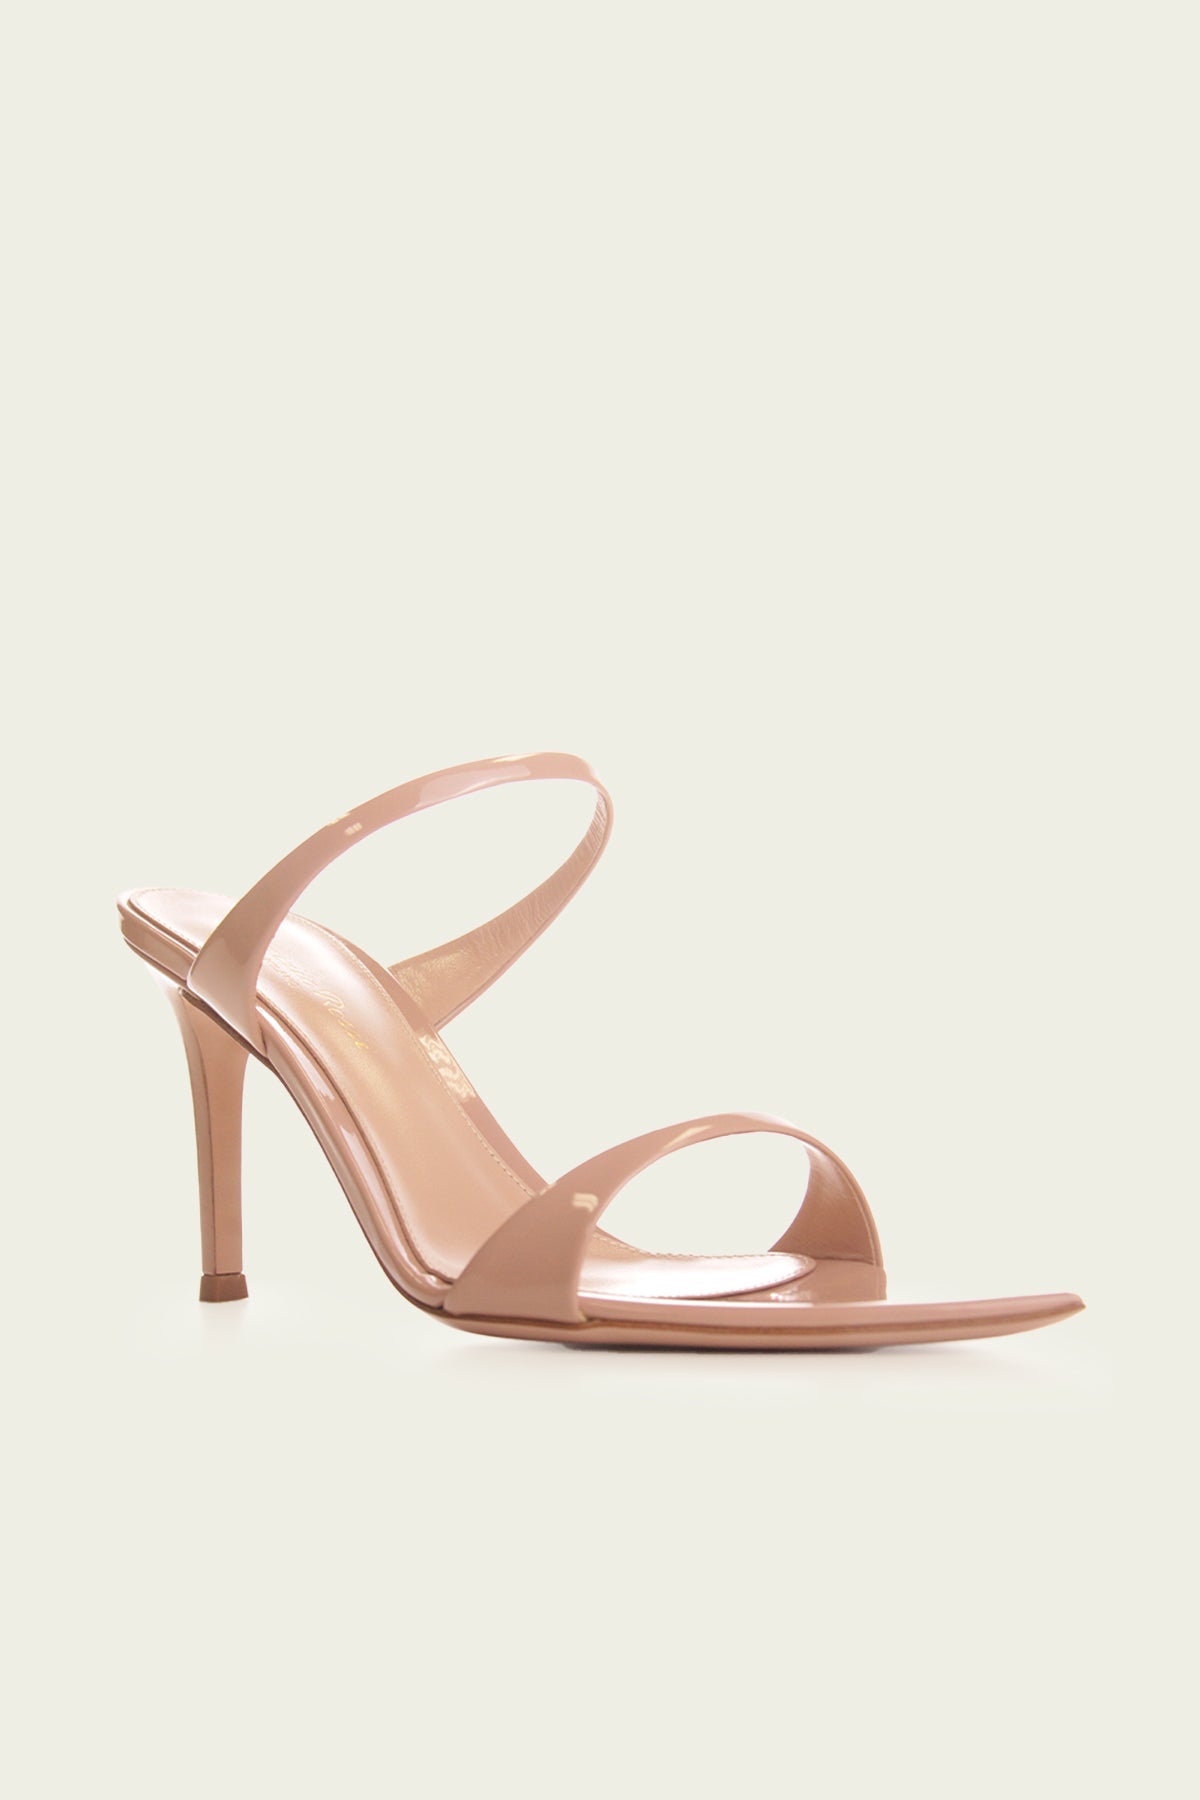 Vernice Sandal 85 in Peach - shop-olivia.com